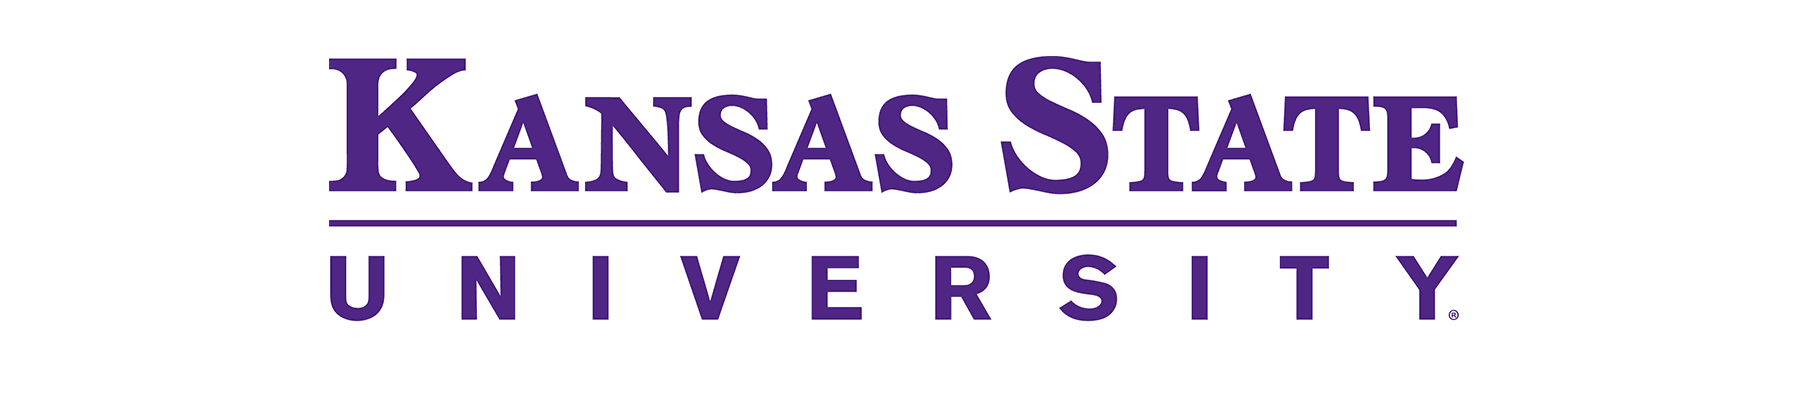 The Kansas State University